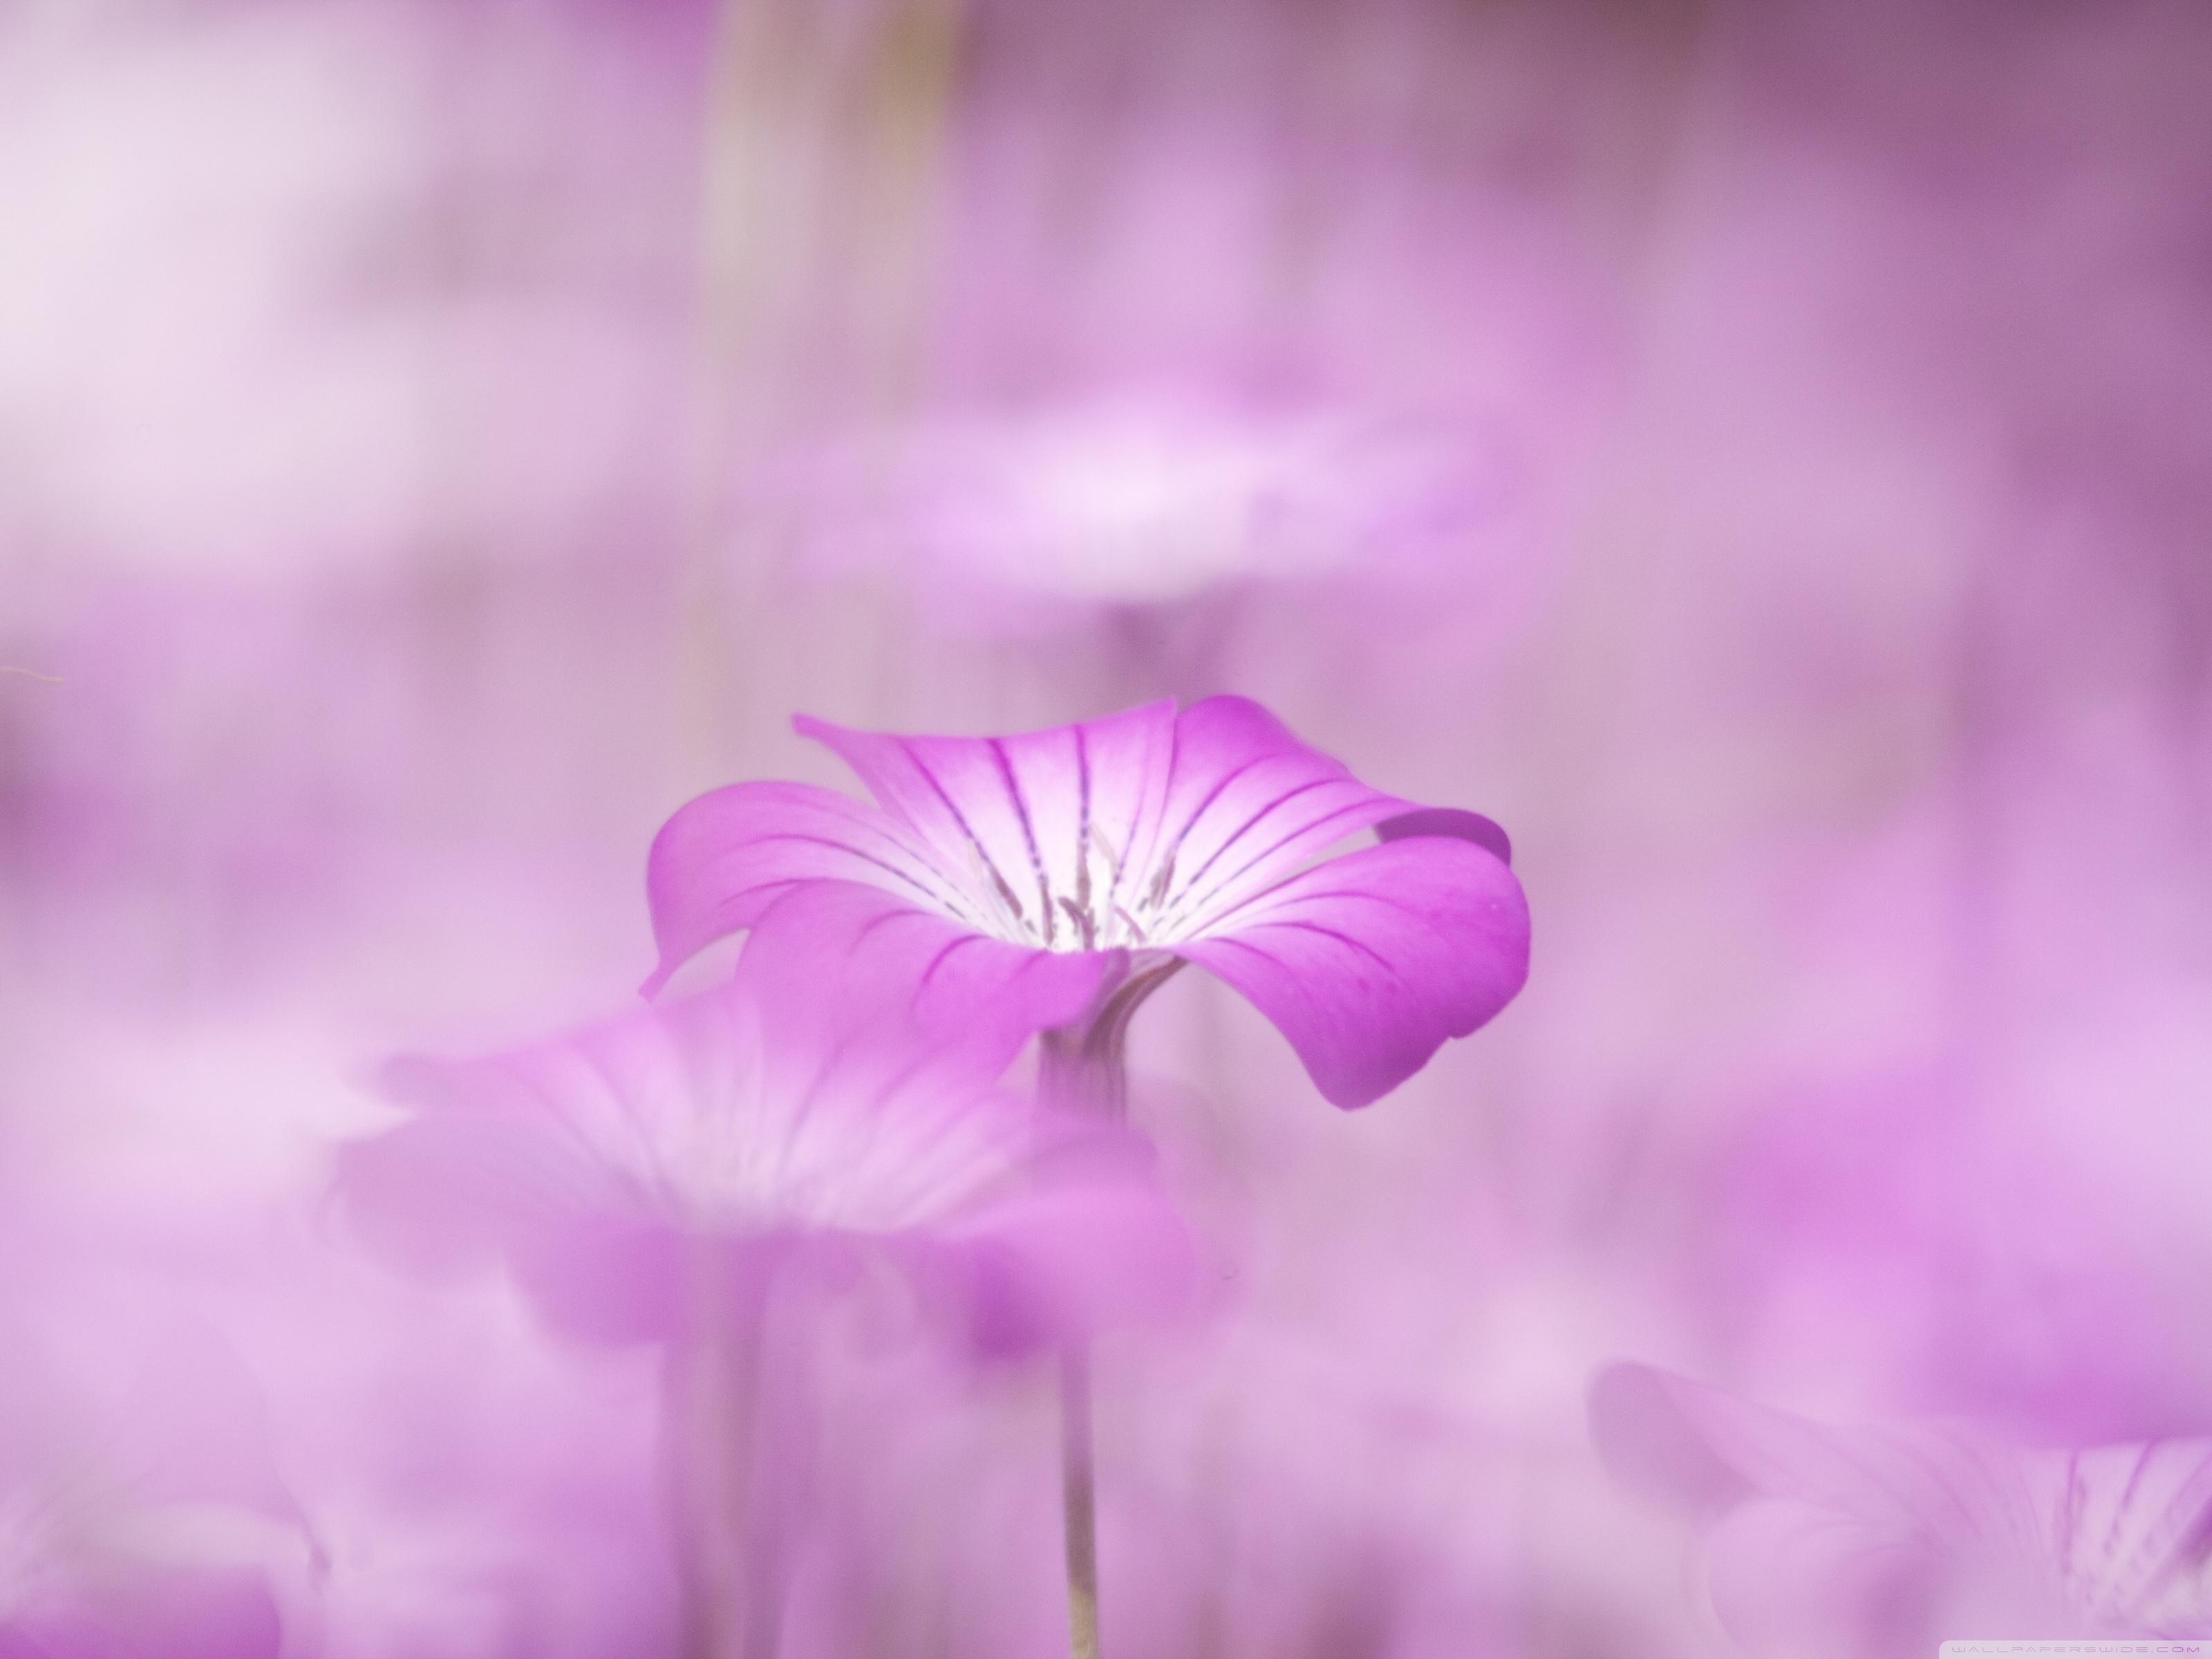 https://wallpaperswide.com/download/purple_flowers_tumblr-wallpaper-3200x2400.jpg